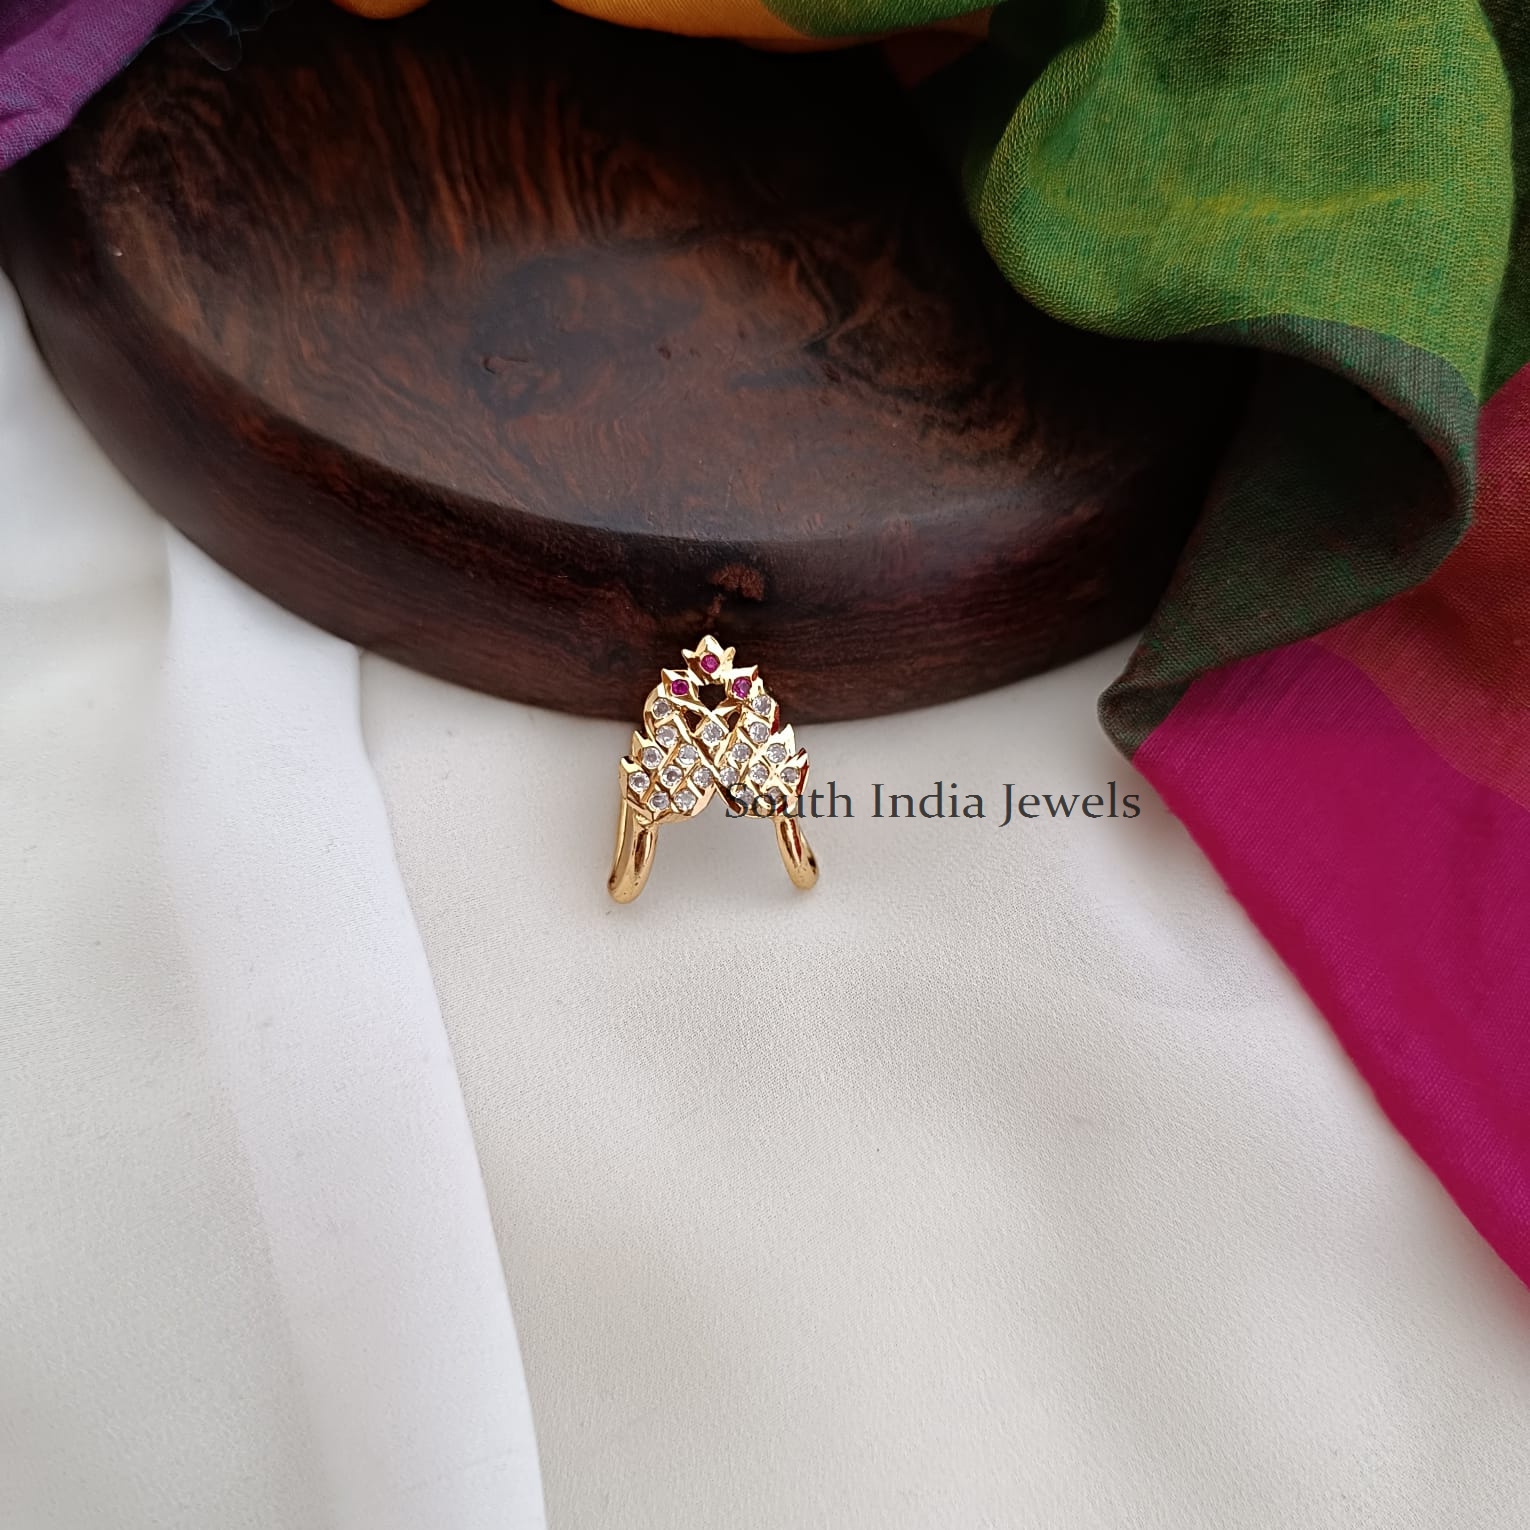 The Vanki Diamond ring has a unique... - Ishtara Jewellery | Facebook